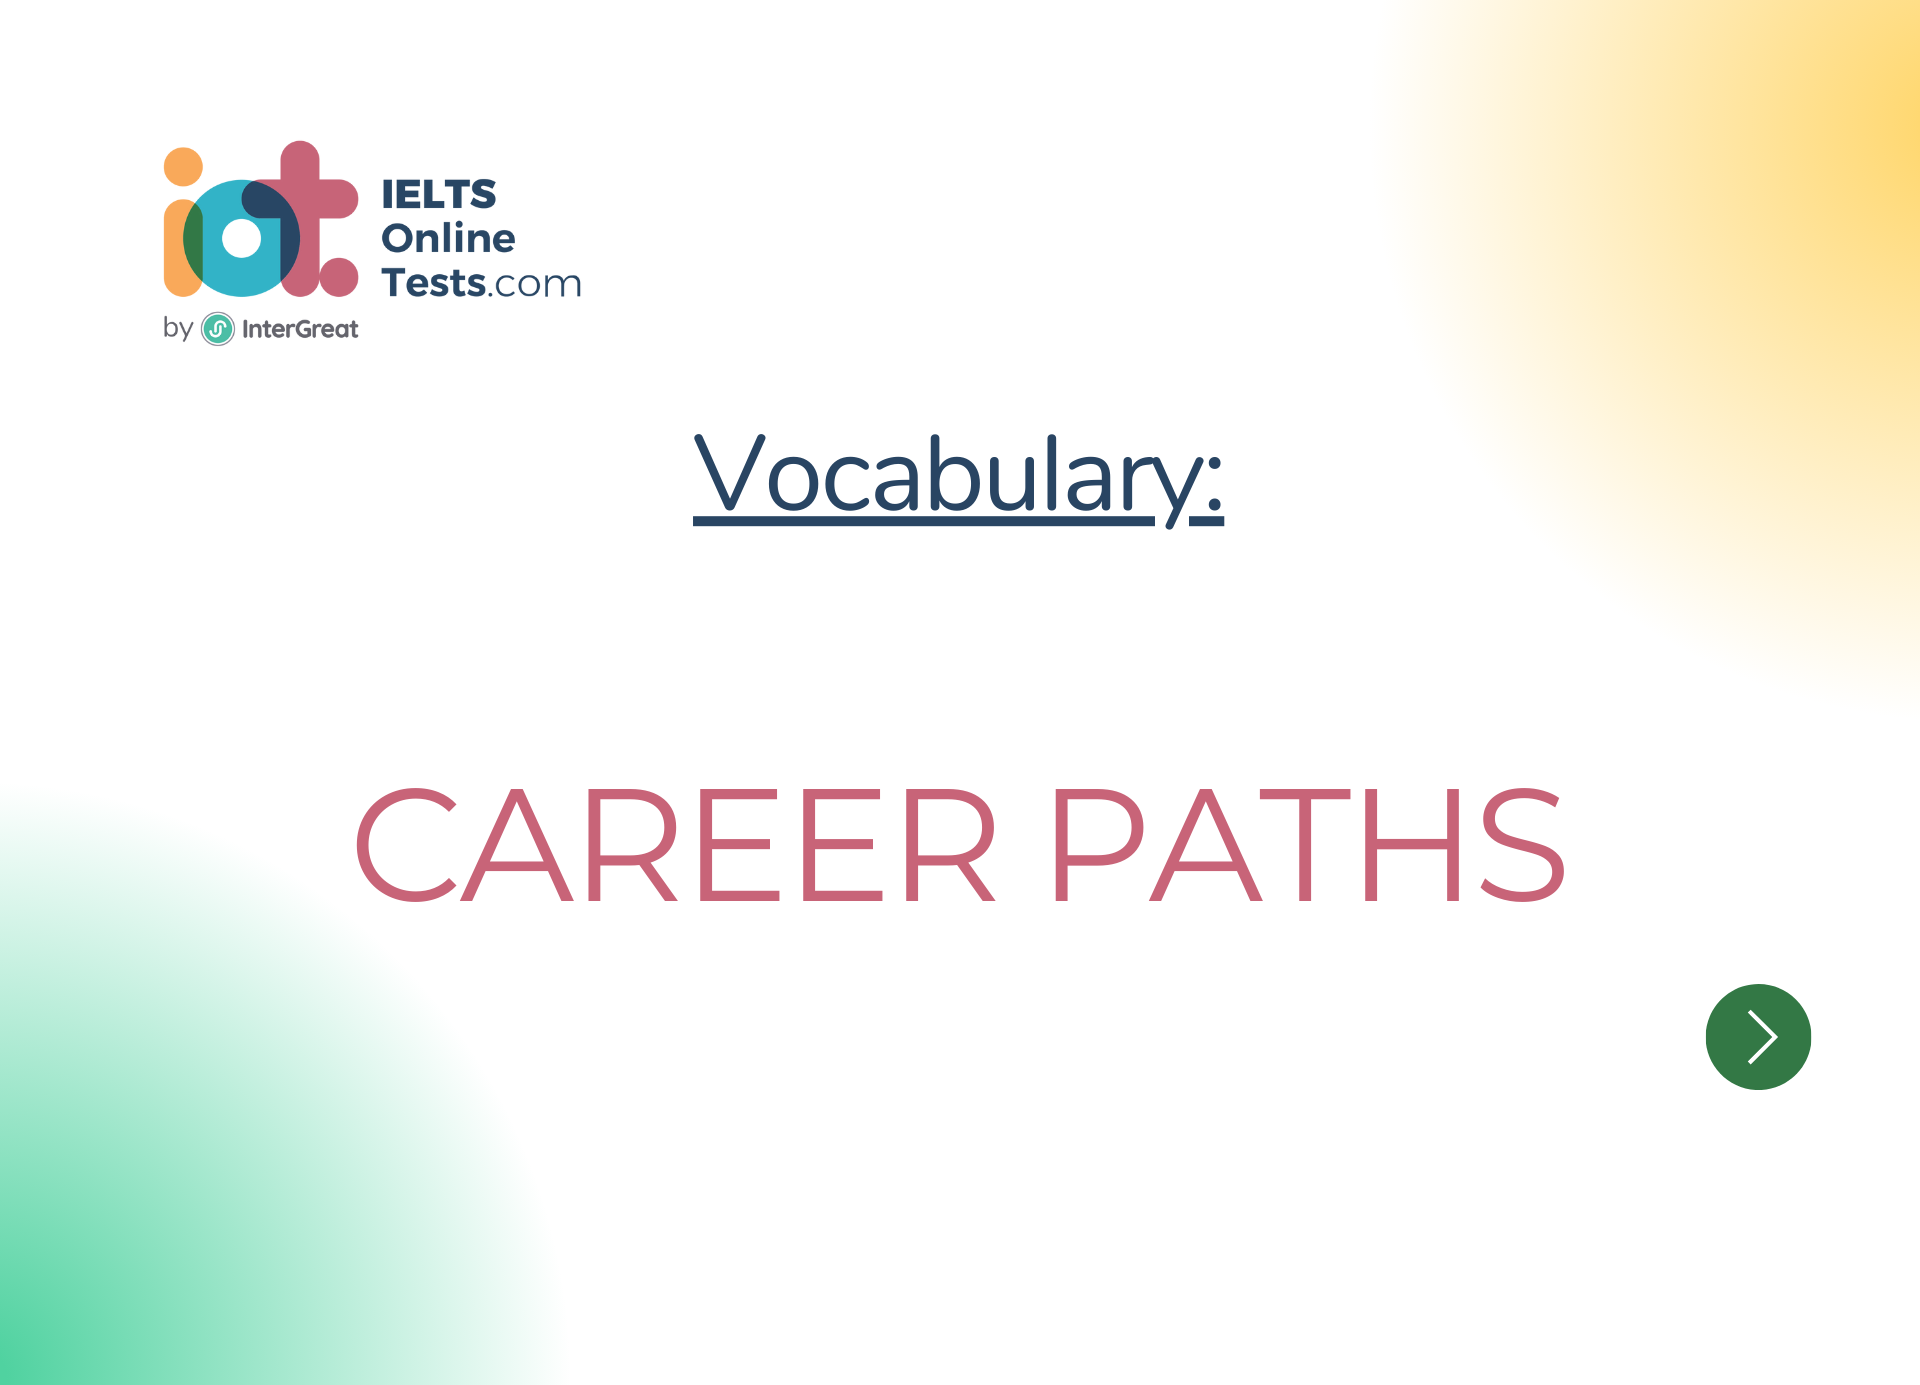 Career paths